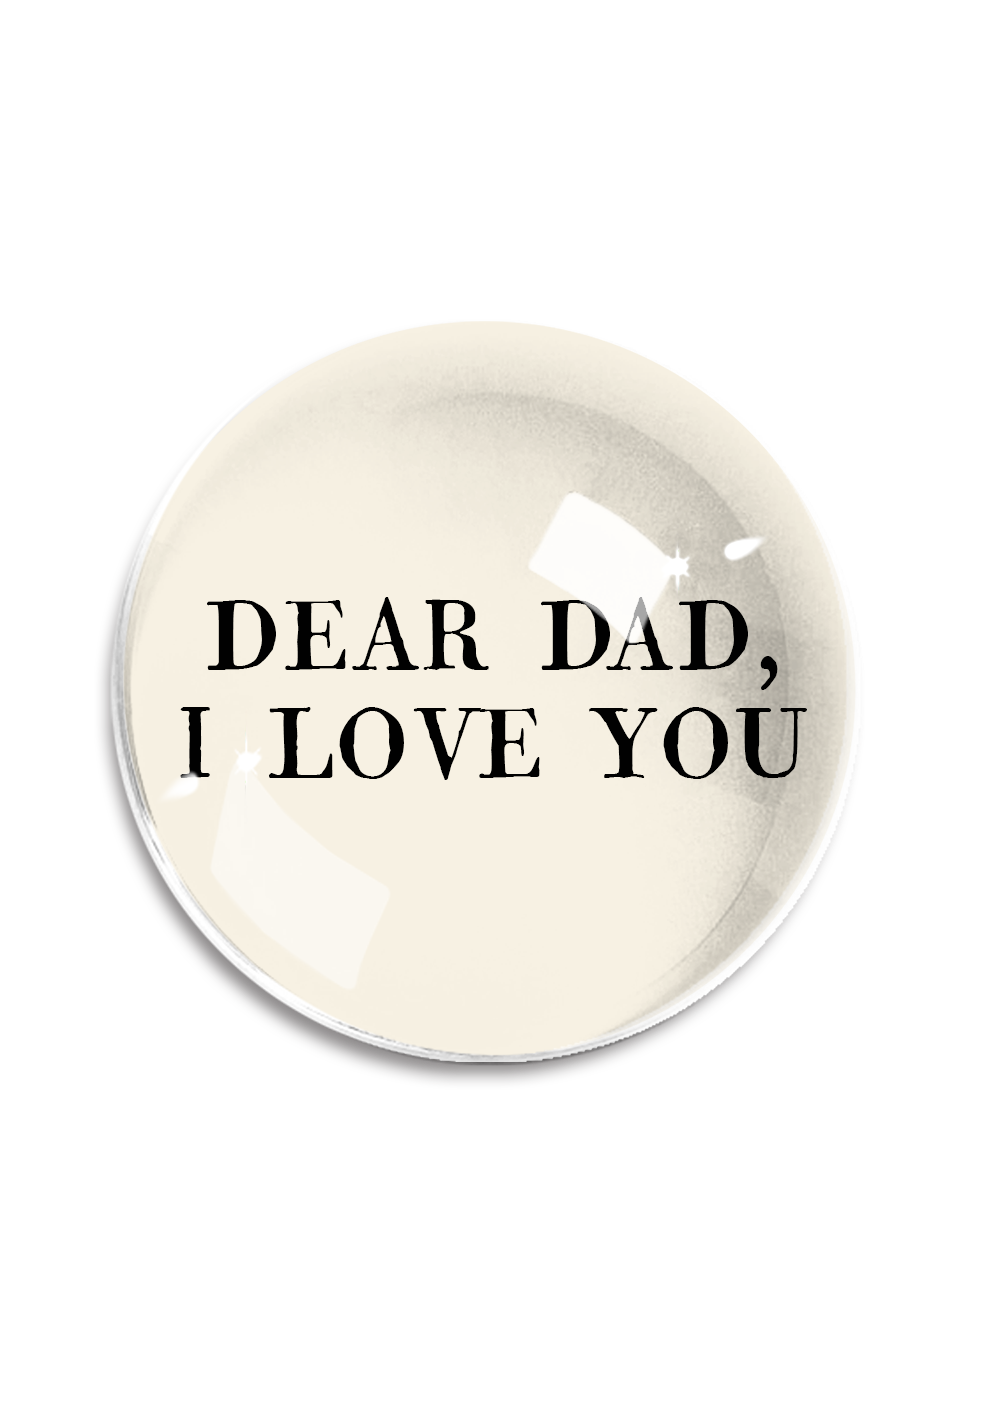 Bensgarden.com | Dear Dad, I Love You Crystal Dome Paperweight - Ben's Garden. Made in New York City.